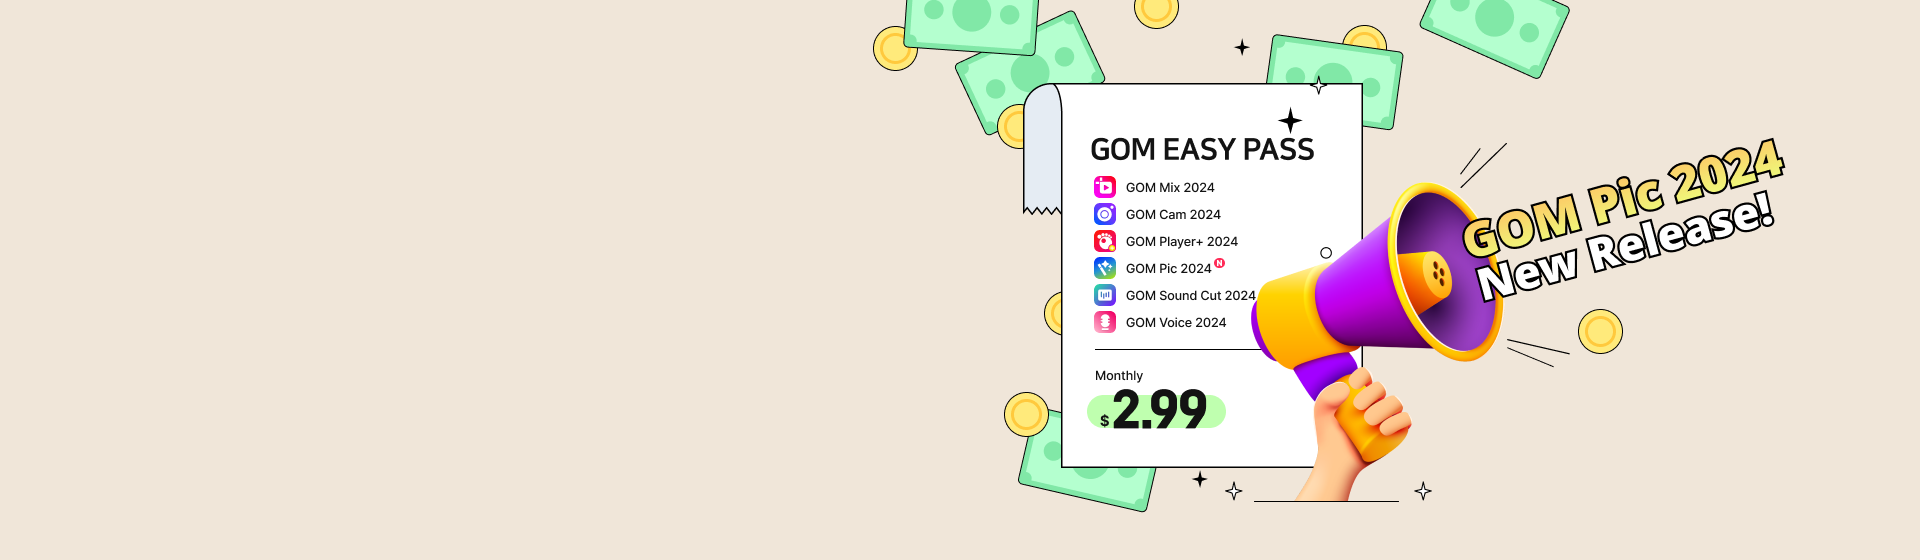 GOM EASY PASS GOM Mix 2024, GOM Cam 2024, GOM Player+ 2024, GOM Pic 2024(N), GOM Sound Cut 2024, GOM Voice 2024, Monthly $2.99, GOM Pic 2024 New Release!